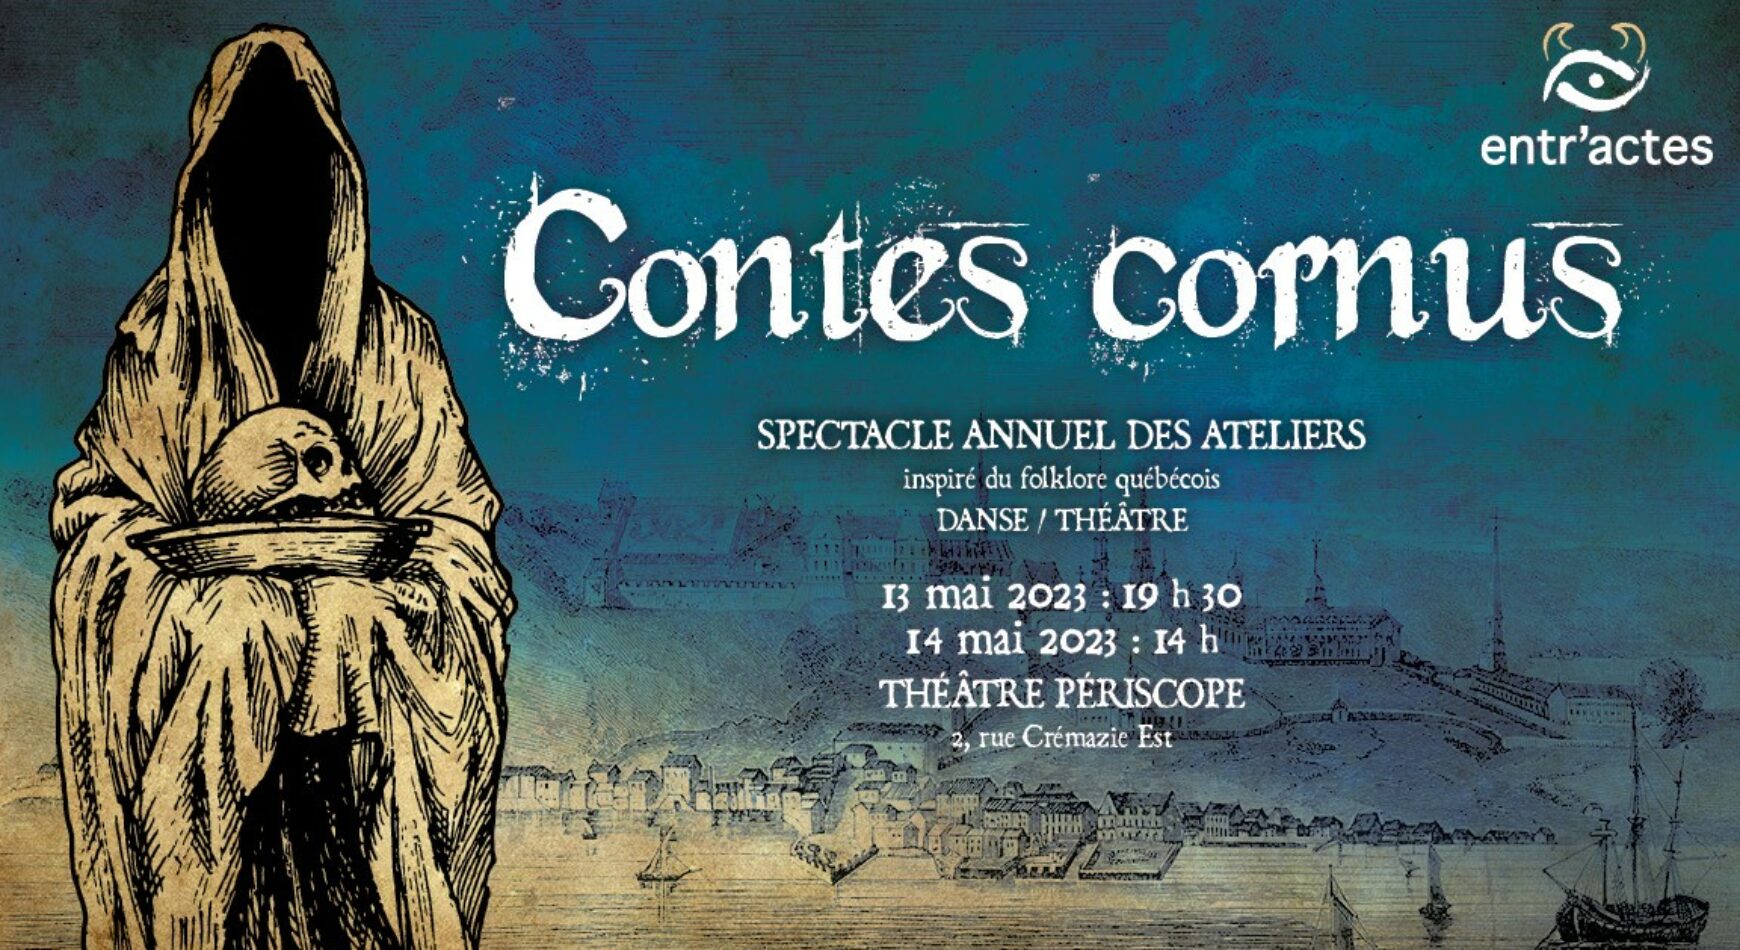 CONTES CORNUS – Spectacle annuel des ateliers